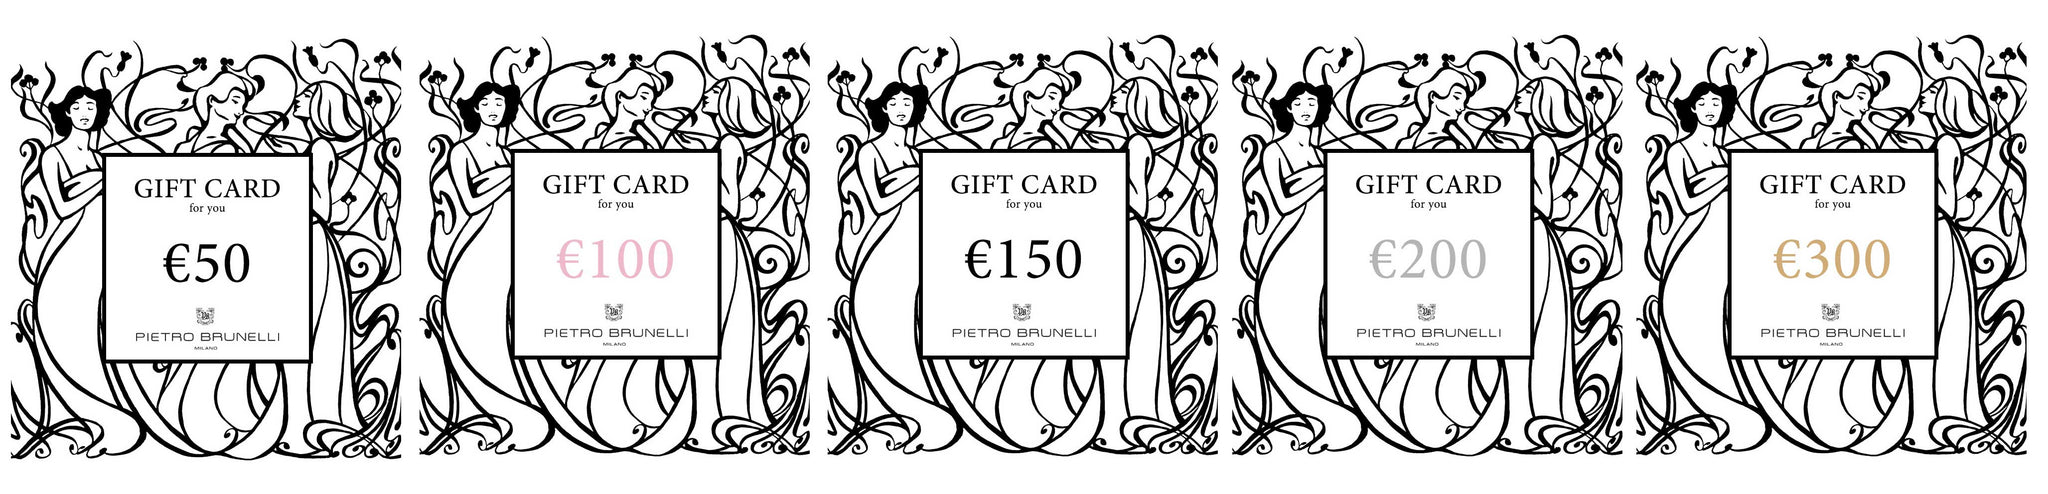 Pietro Brunelli Gift Card